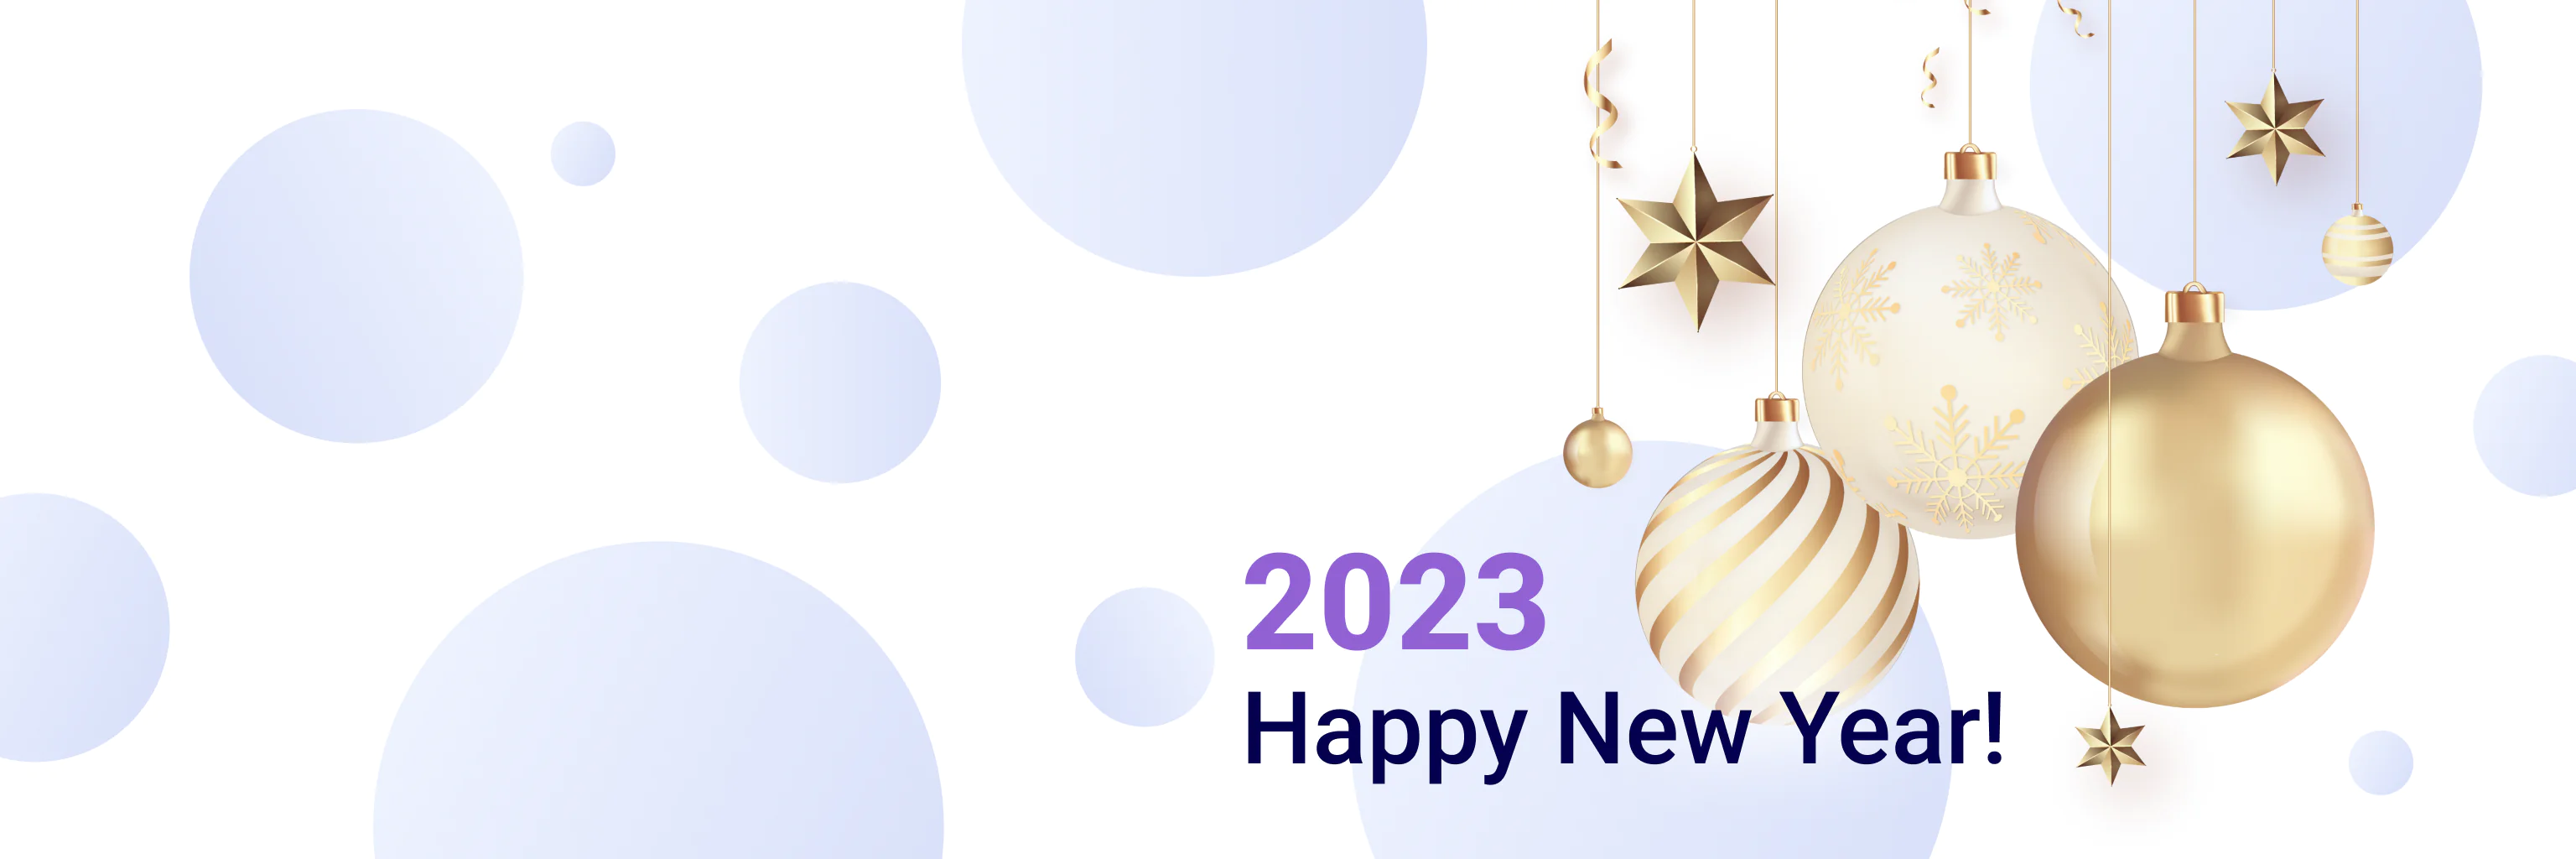 Devtorium Software Product Development Company 2022 yearly progress report.